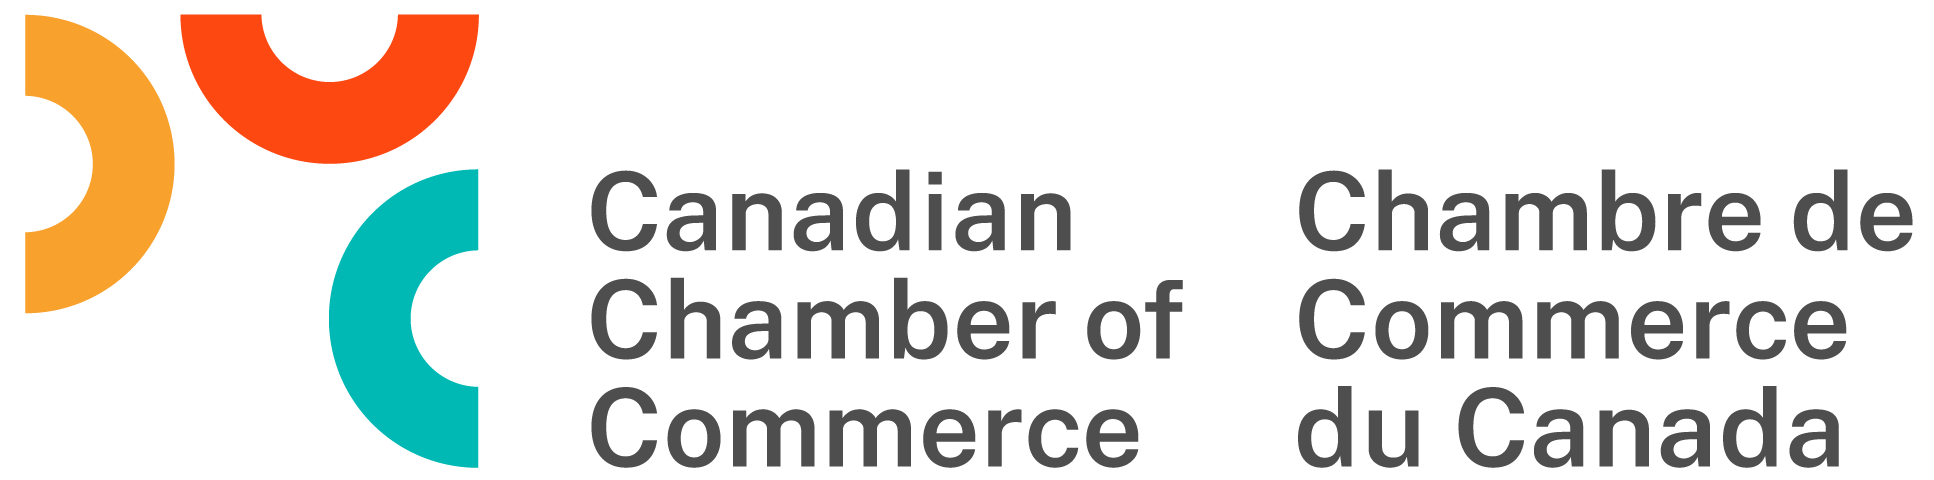 Canadian Chamber of Commerce 2022 - English logo